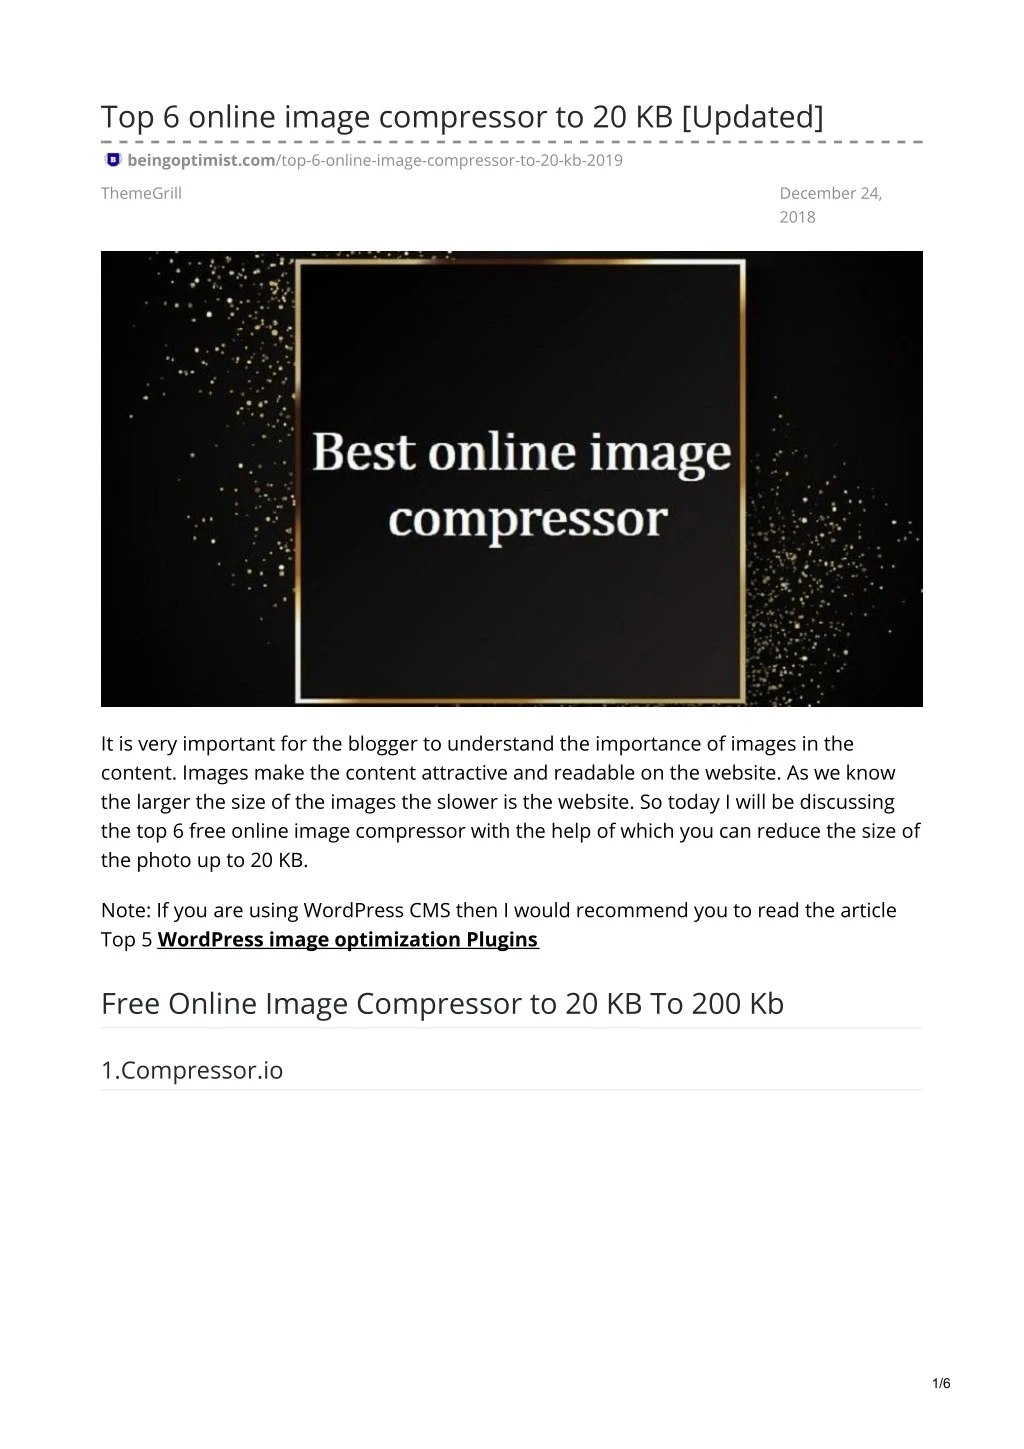 top 6 online image compressor to 20 kb updated